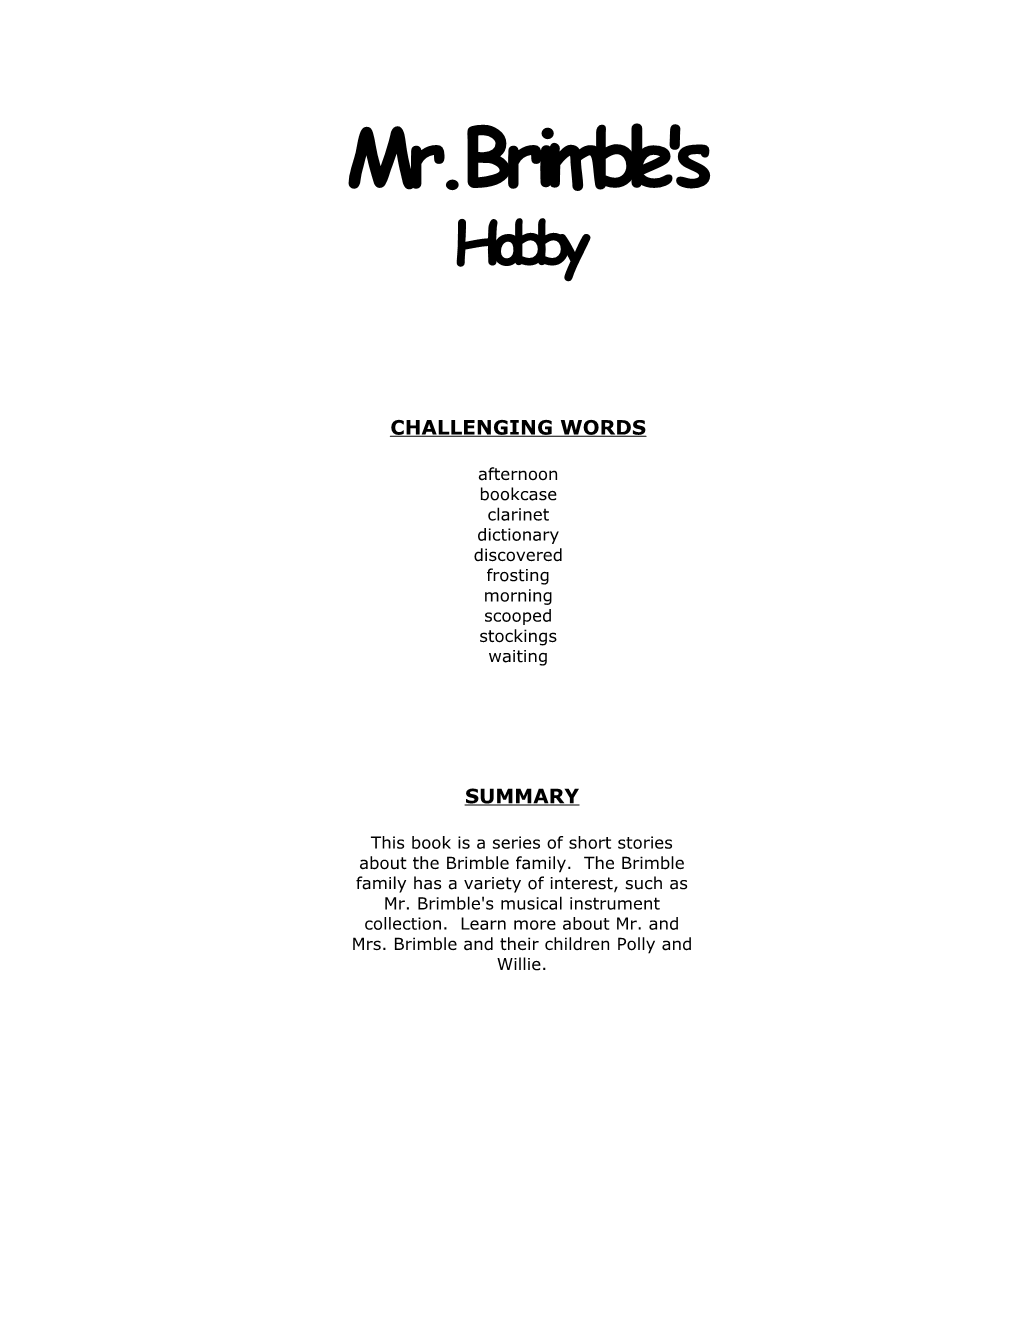 Book Title: Mr. Brimble's Hobby